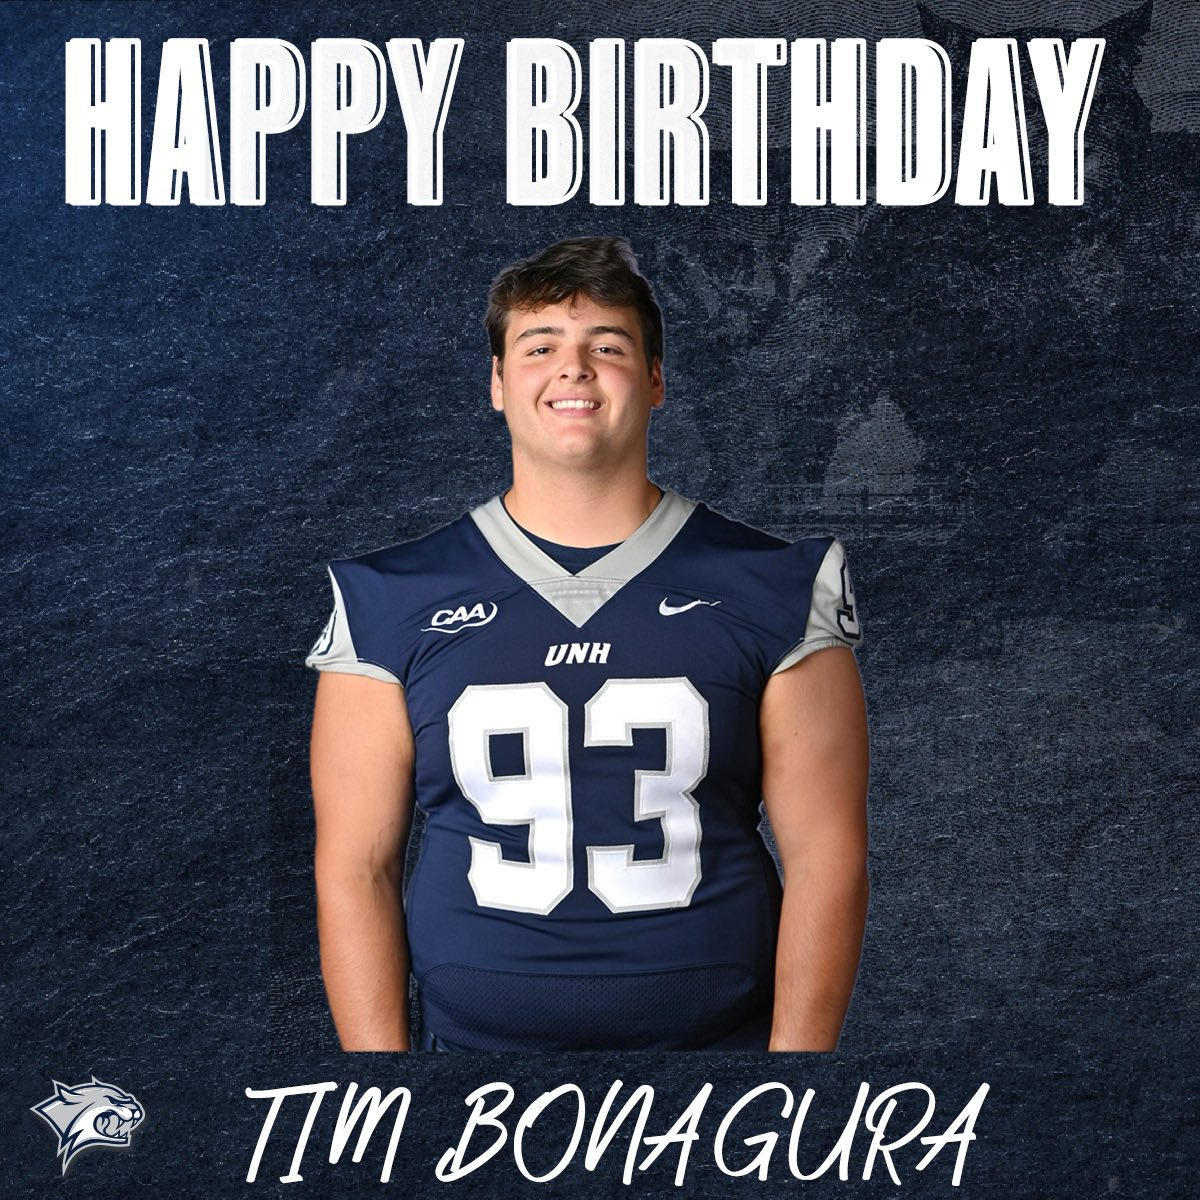 Happy birthday @TimBonagura